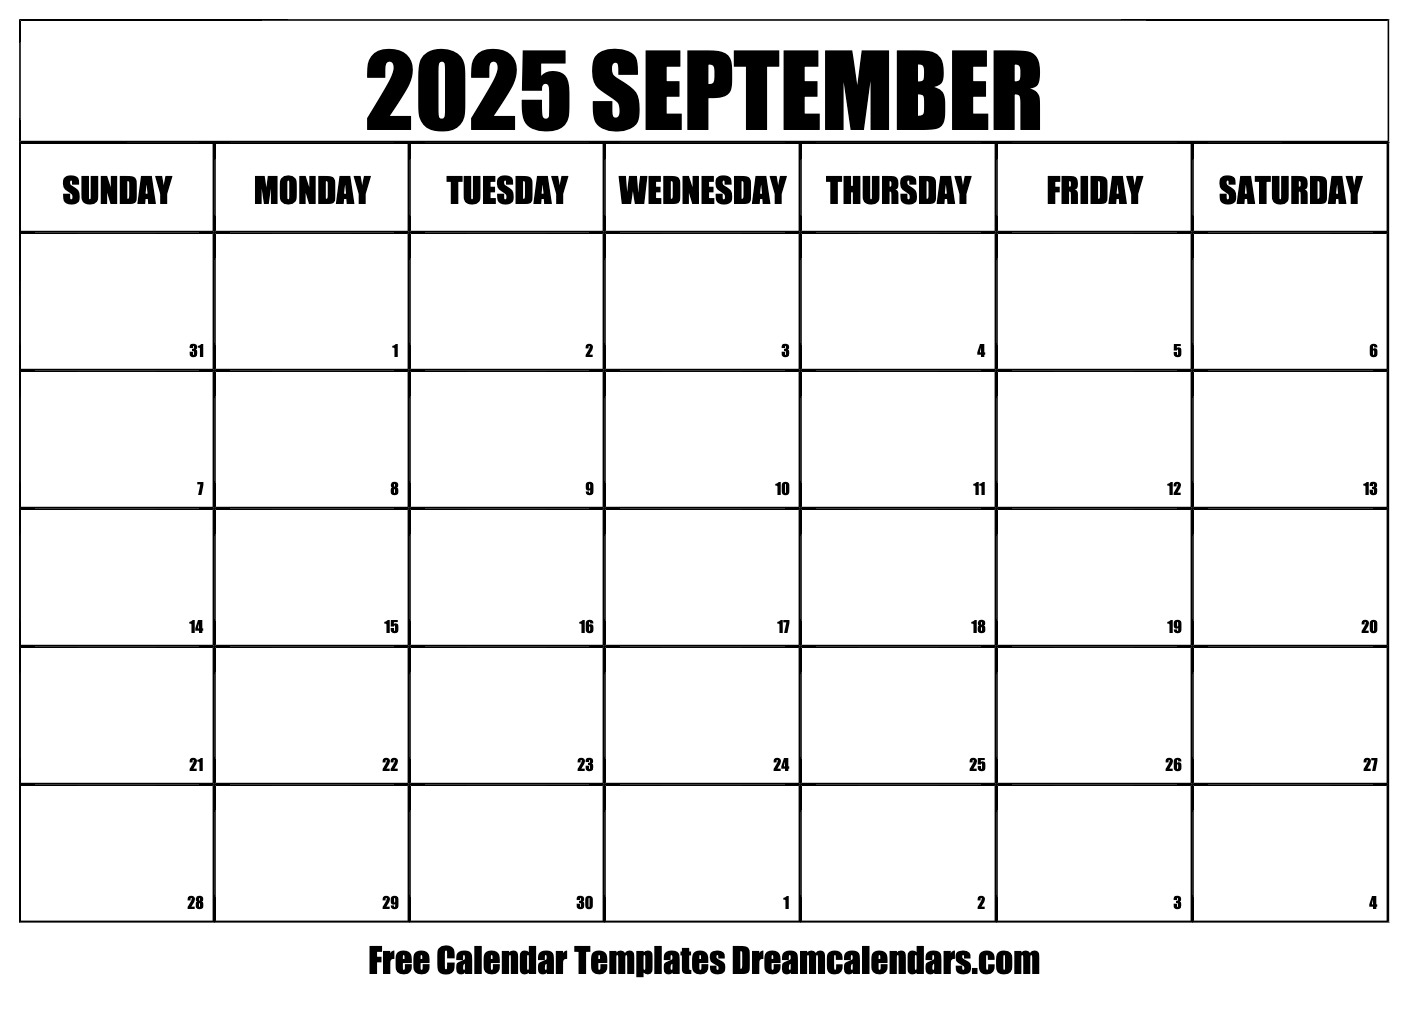 september-2025-calendar-free-blank-printable-with-holidays